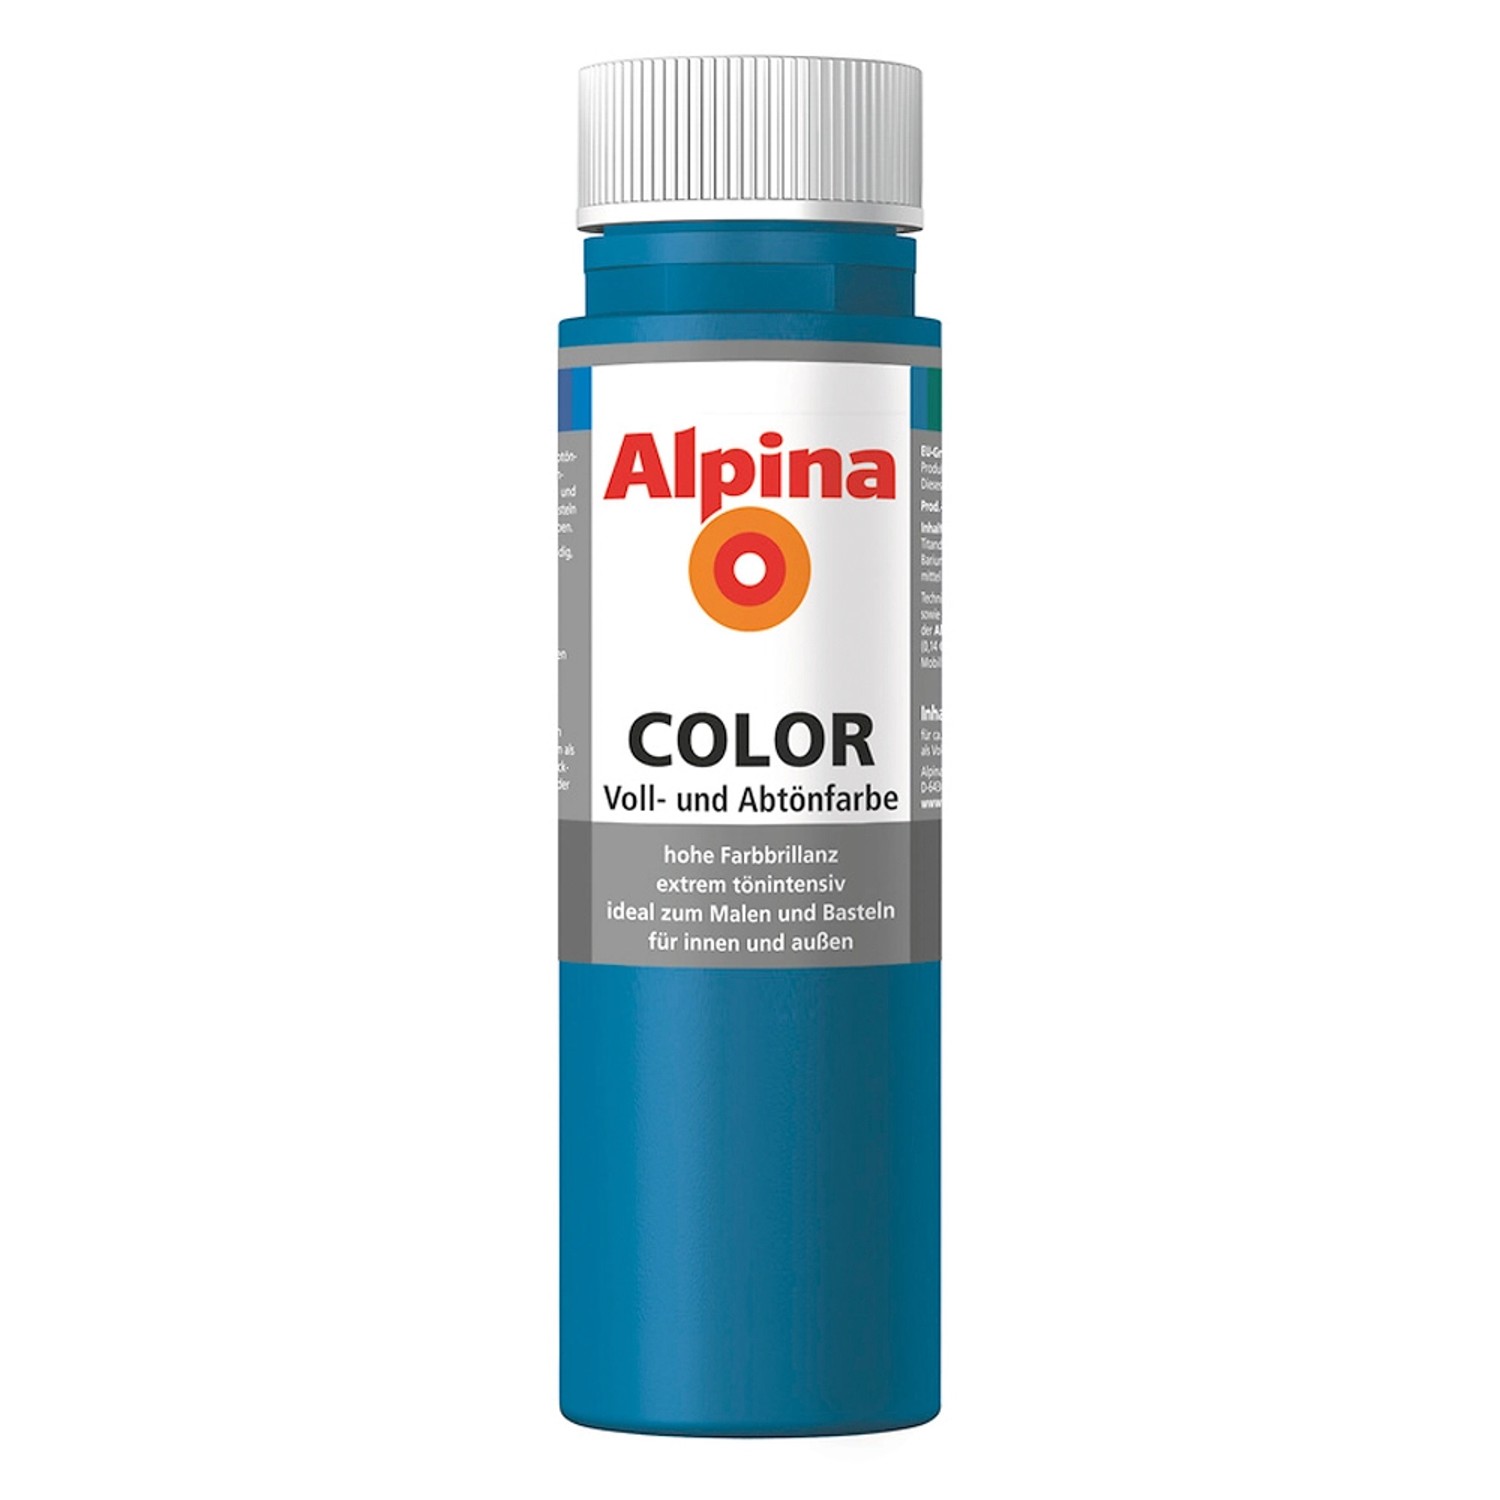 Alpina Color Cool Blue seidenmatt 250 ml